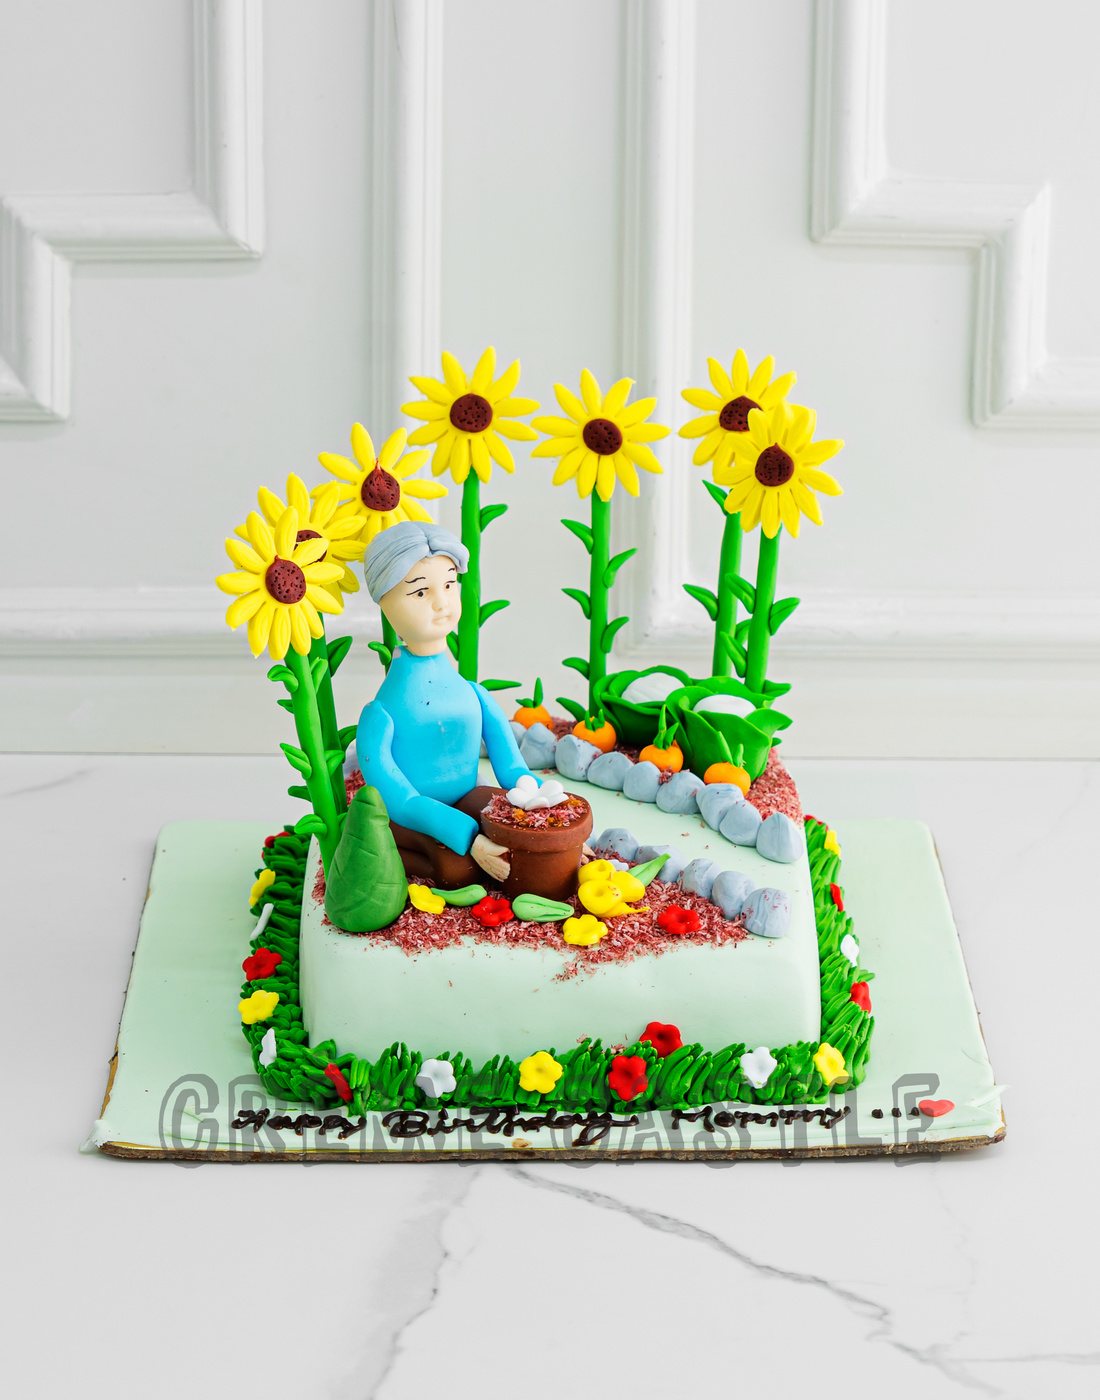 Garden Themed Cake - Amazing Cake Ideas